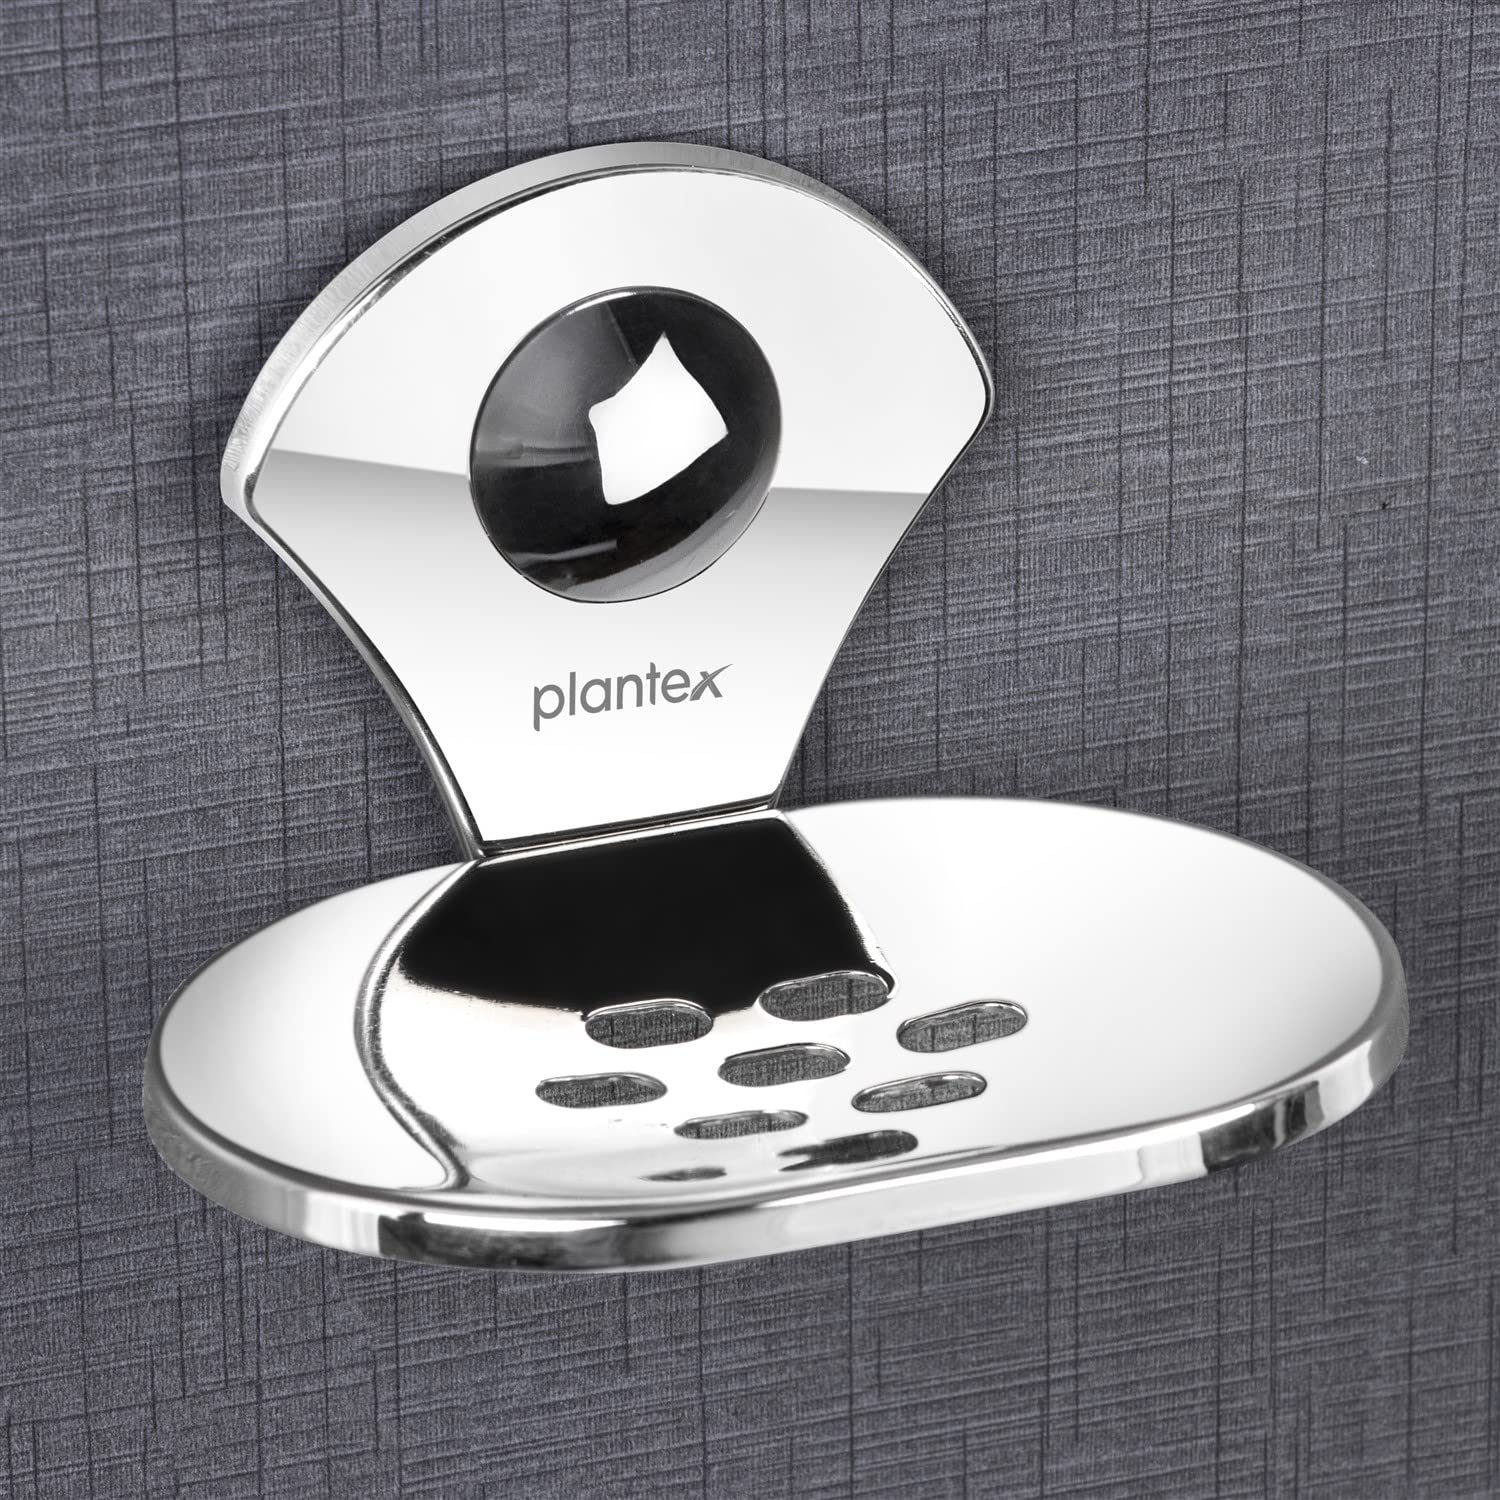 Plantex Royal Stainless Steel Bathroom Accessories Set / Bathroom Hanger for Towel / Towel Bar / Napkin Ring / Tumbler Holder / Soap Dish / Robe Hook (Pack of 10)